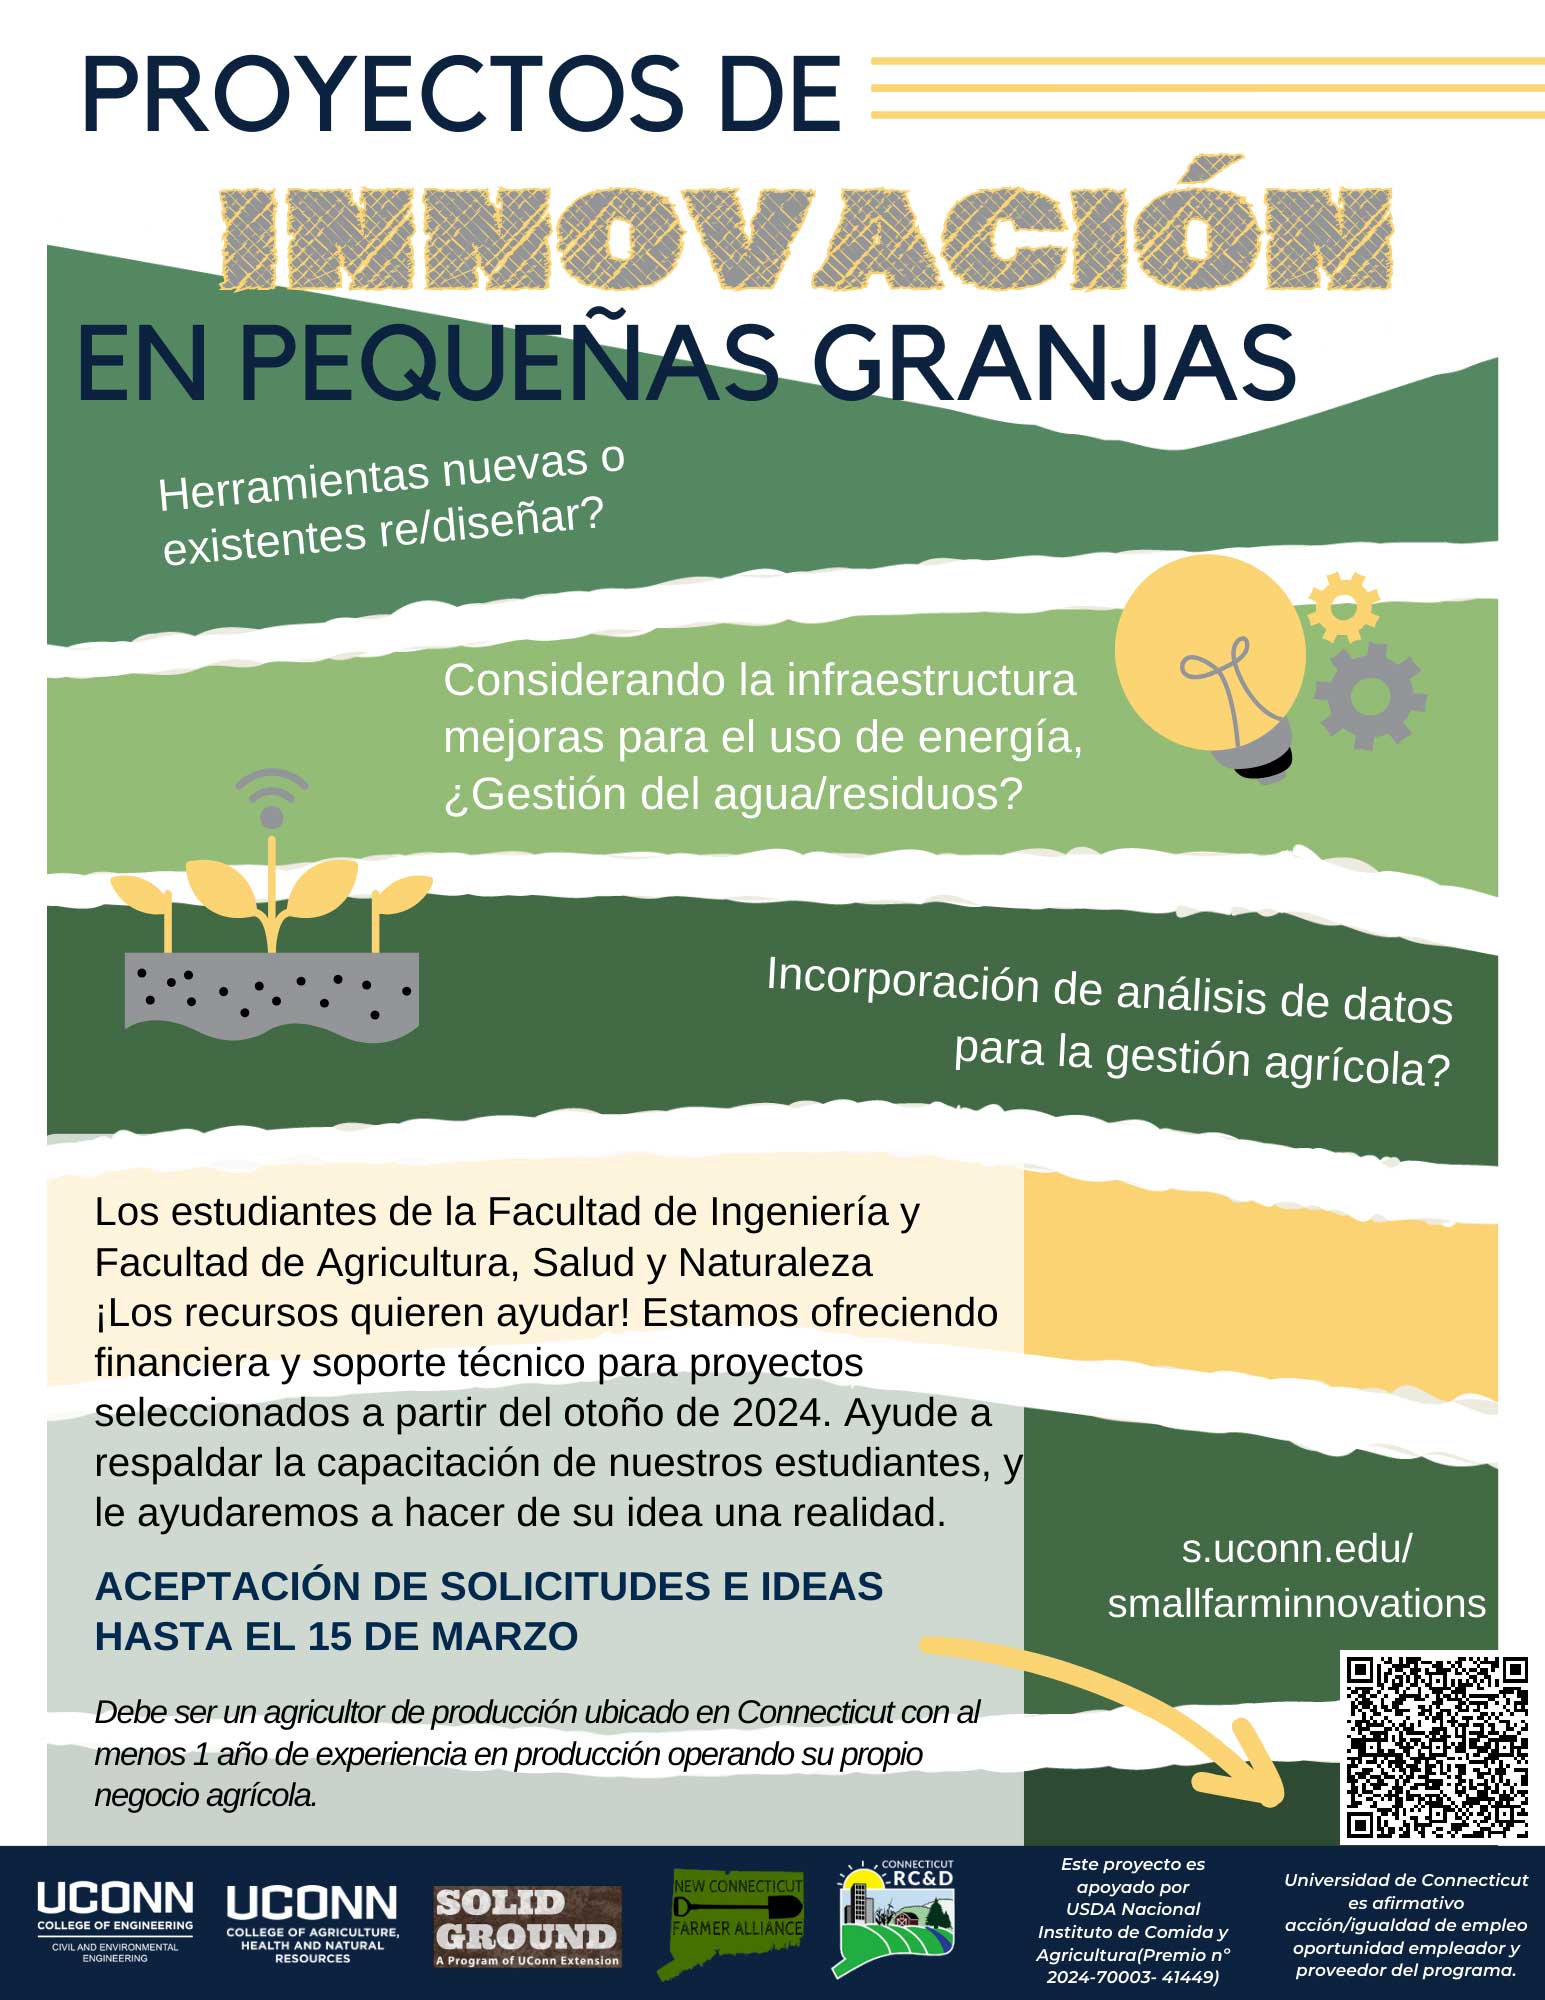 Small farm innovations flyer in Spanish